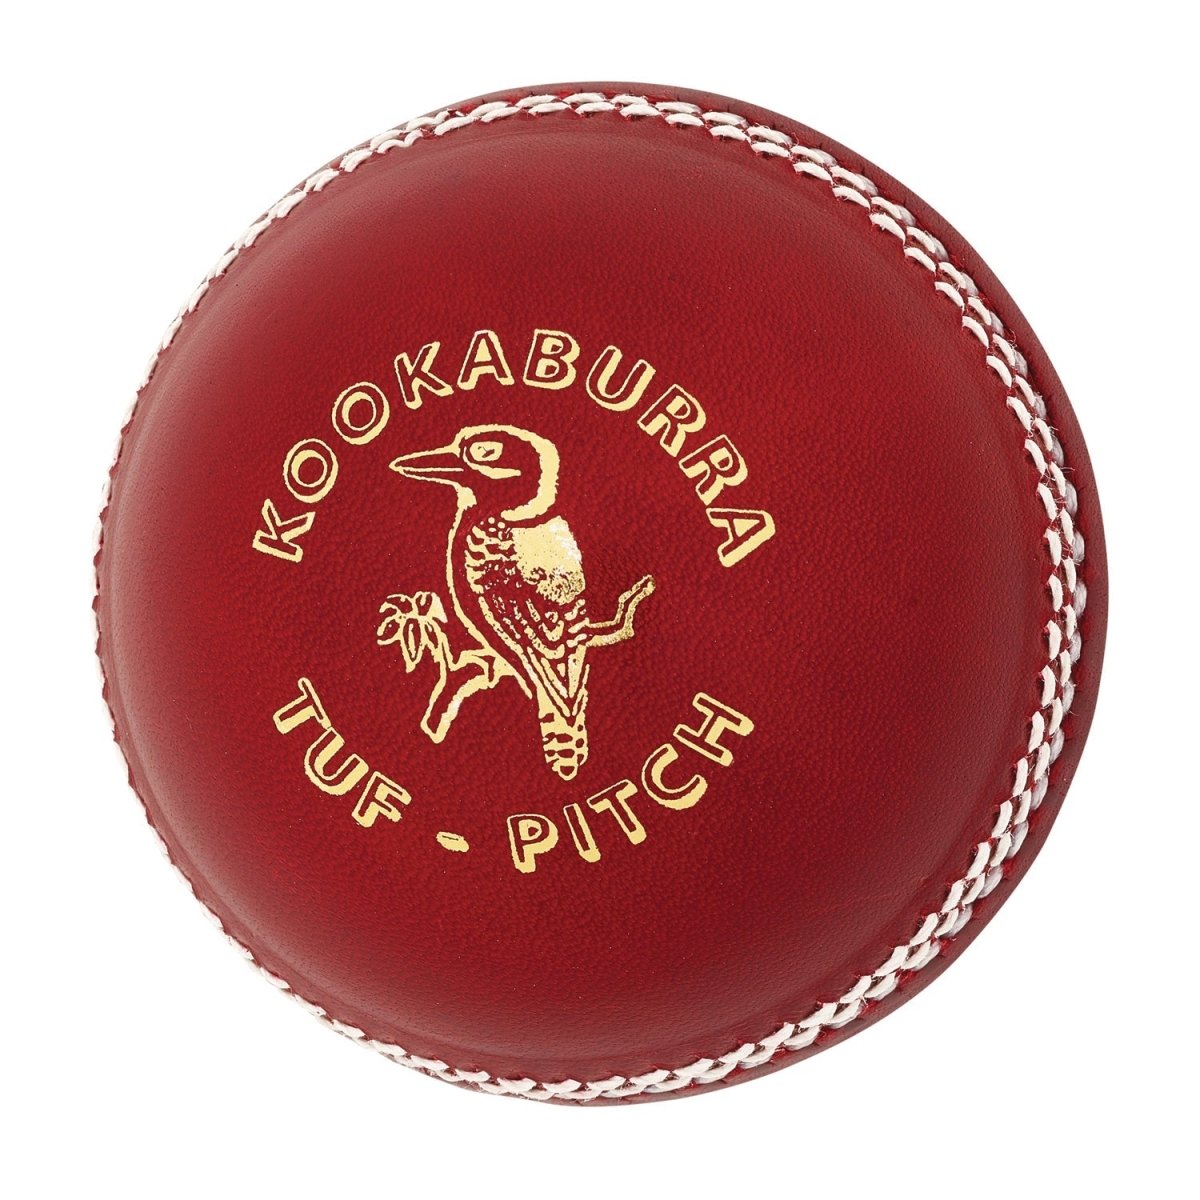 Kookaburra Tuf Pitch Cricket Ball Pack of 12 - Acrux Sports